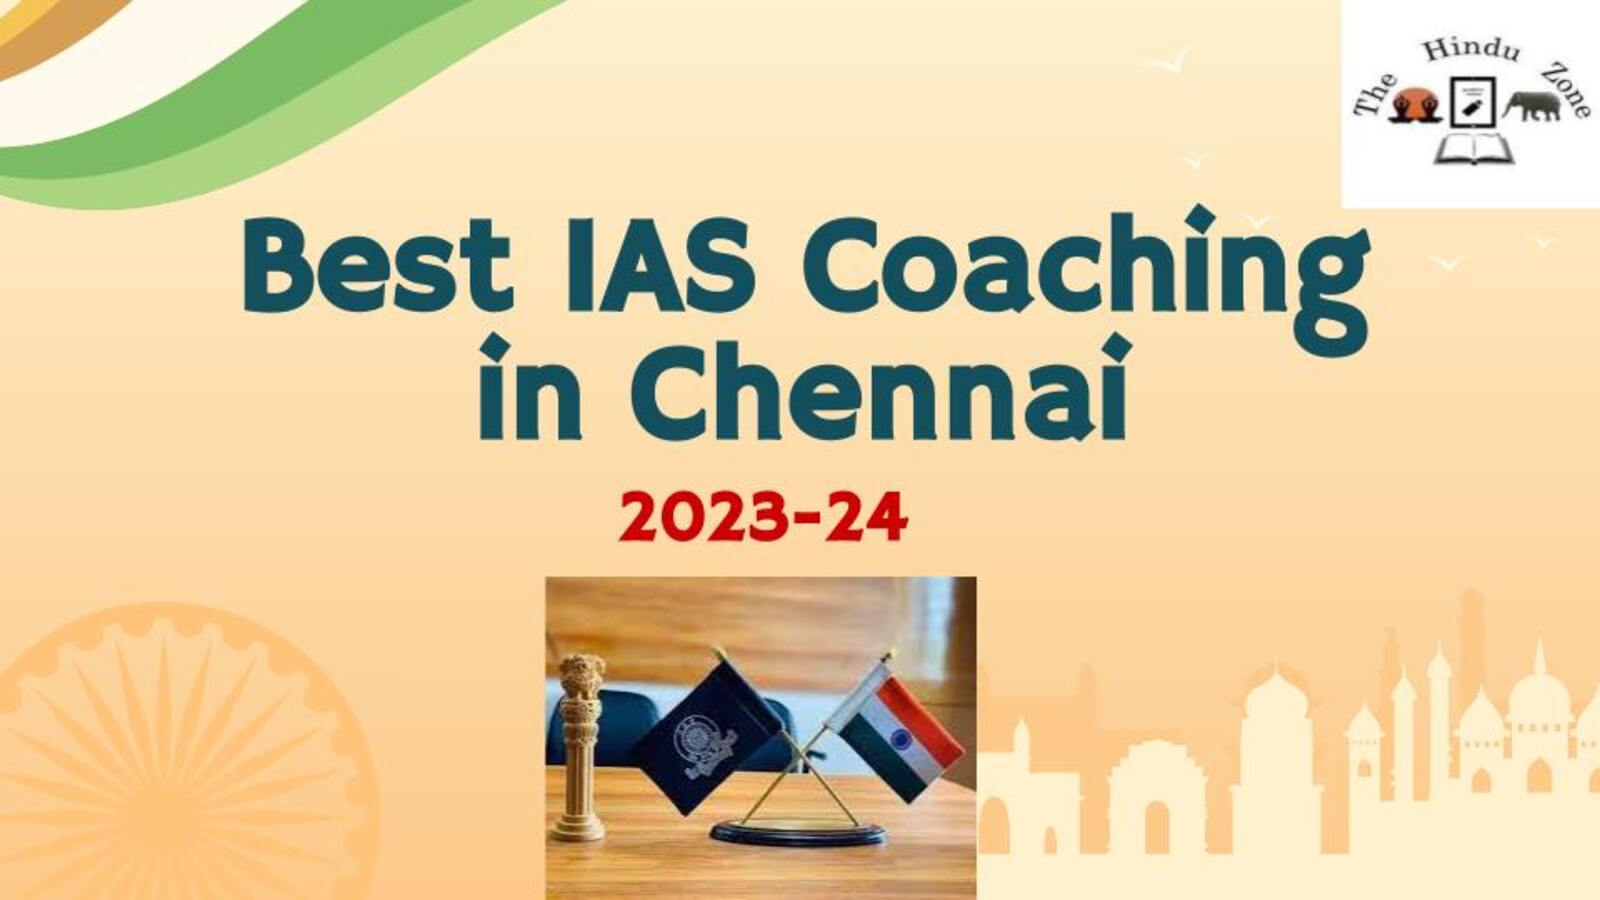 Best IAS Coaching in Chennai 2023